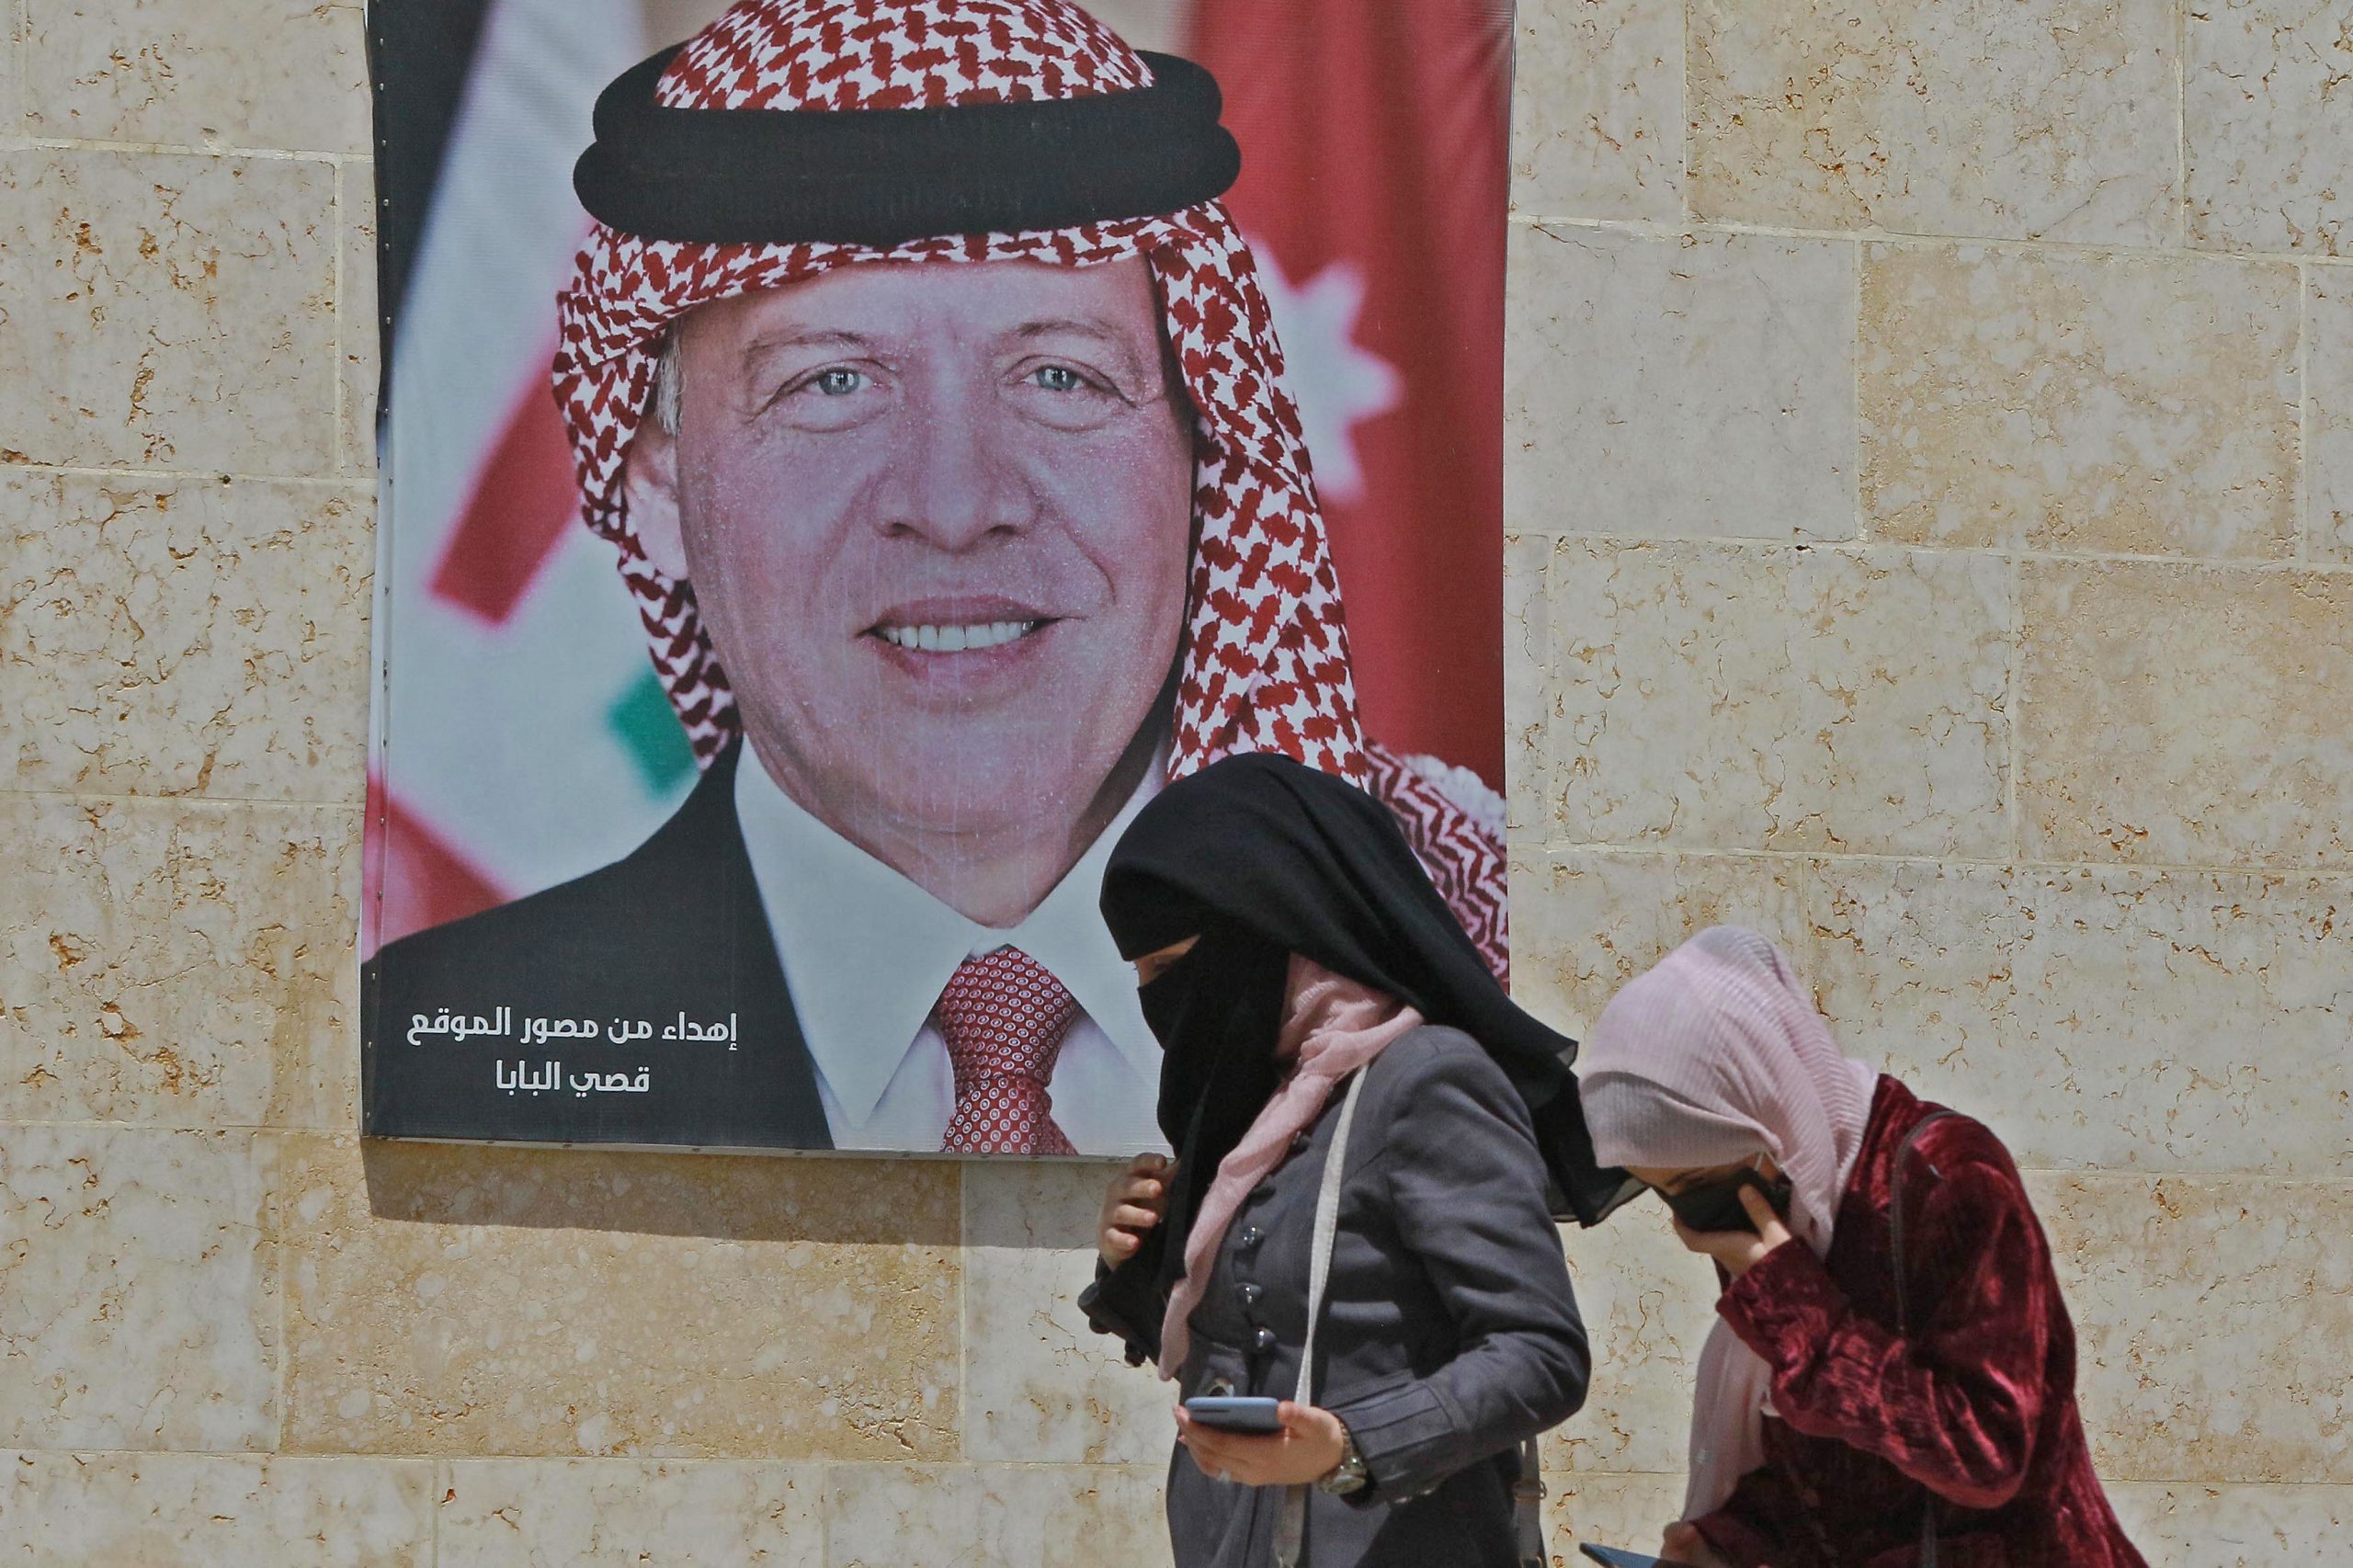 Jordan’s King Abdullah says ‘painful’ palace crisis ‘nipped in the bud’